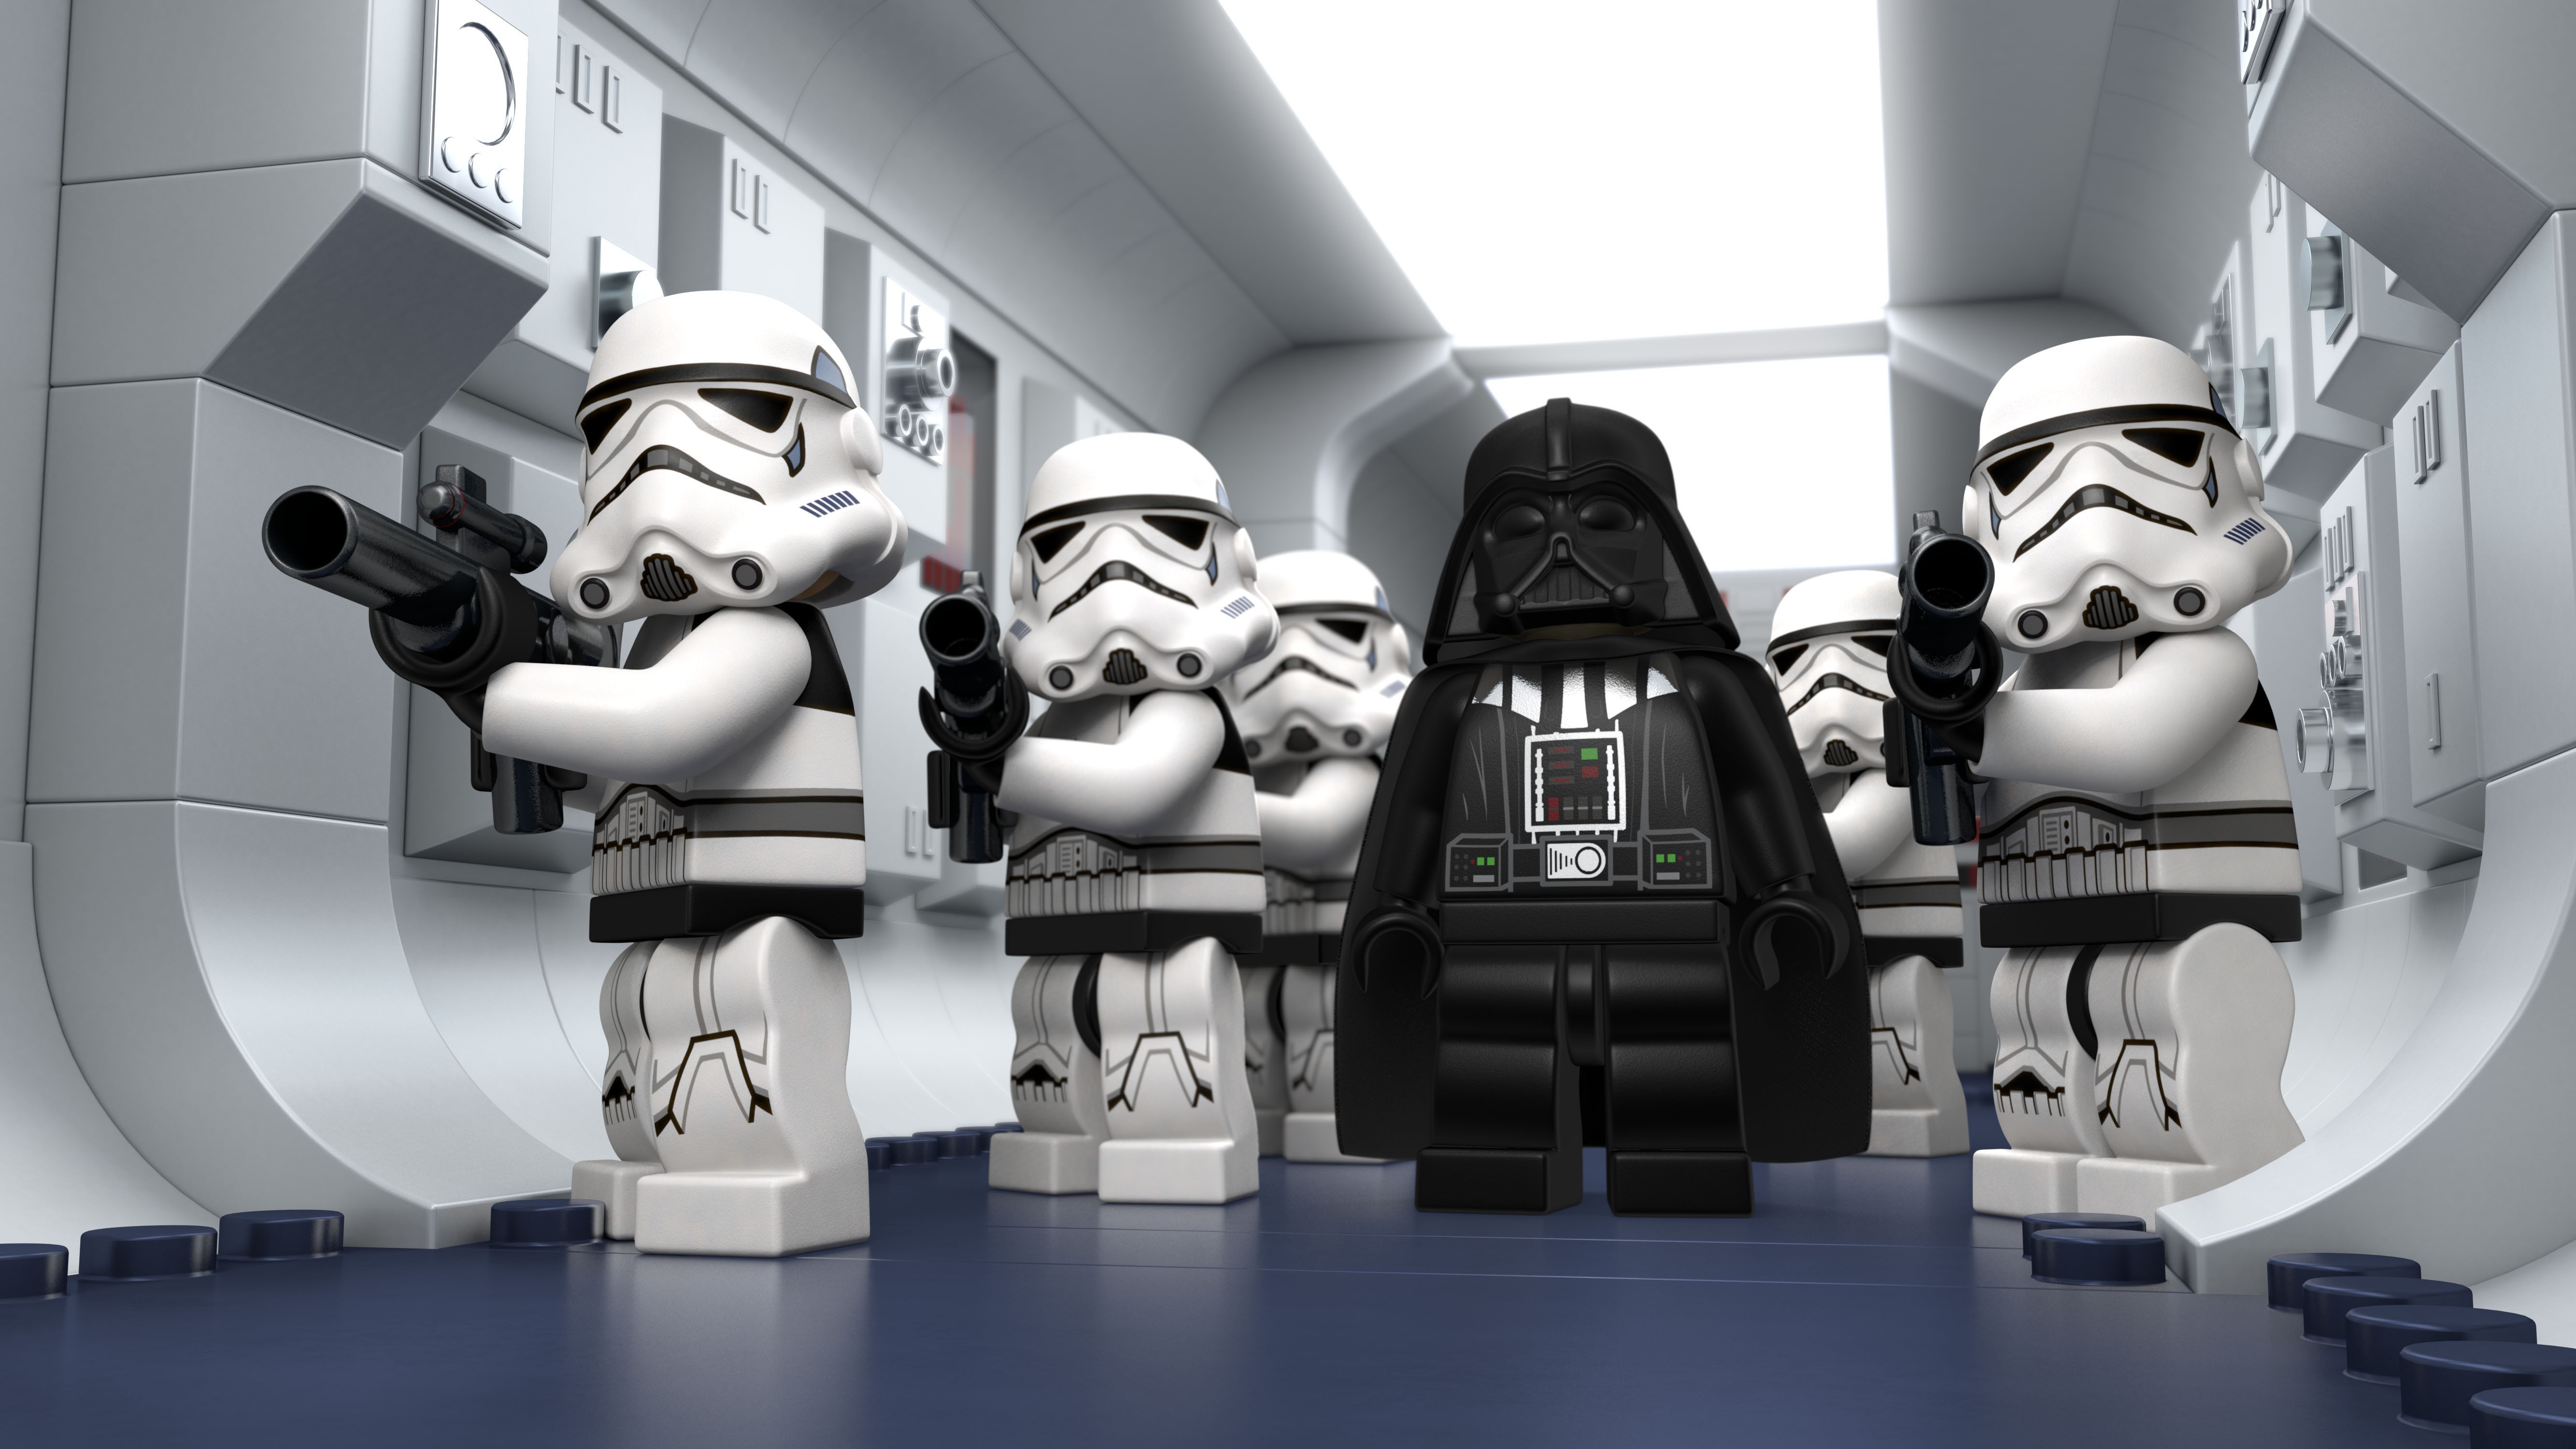 General 5333x3000 Star Wars LEGO Star Wars Darth Vader stormtrooper CGI Sith LEGO digital art Galactic Empire Imperial Forces Star Wars Villains